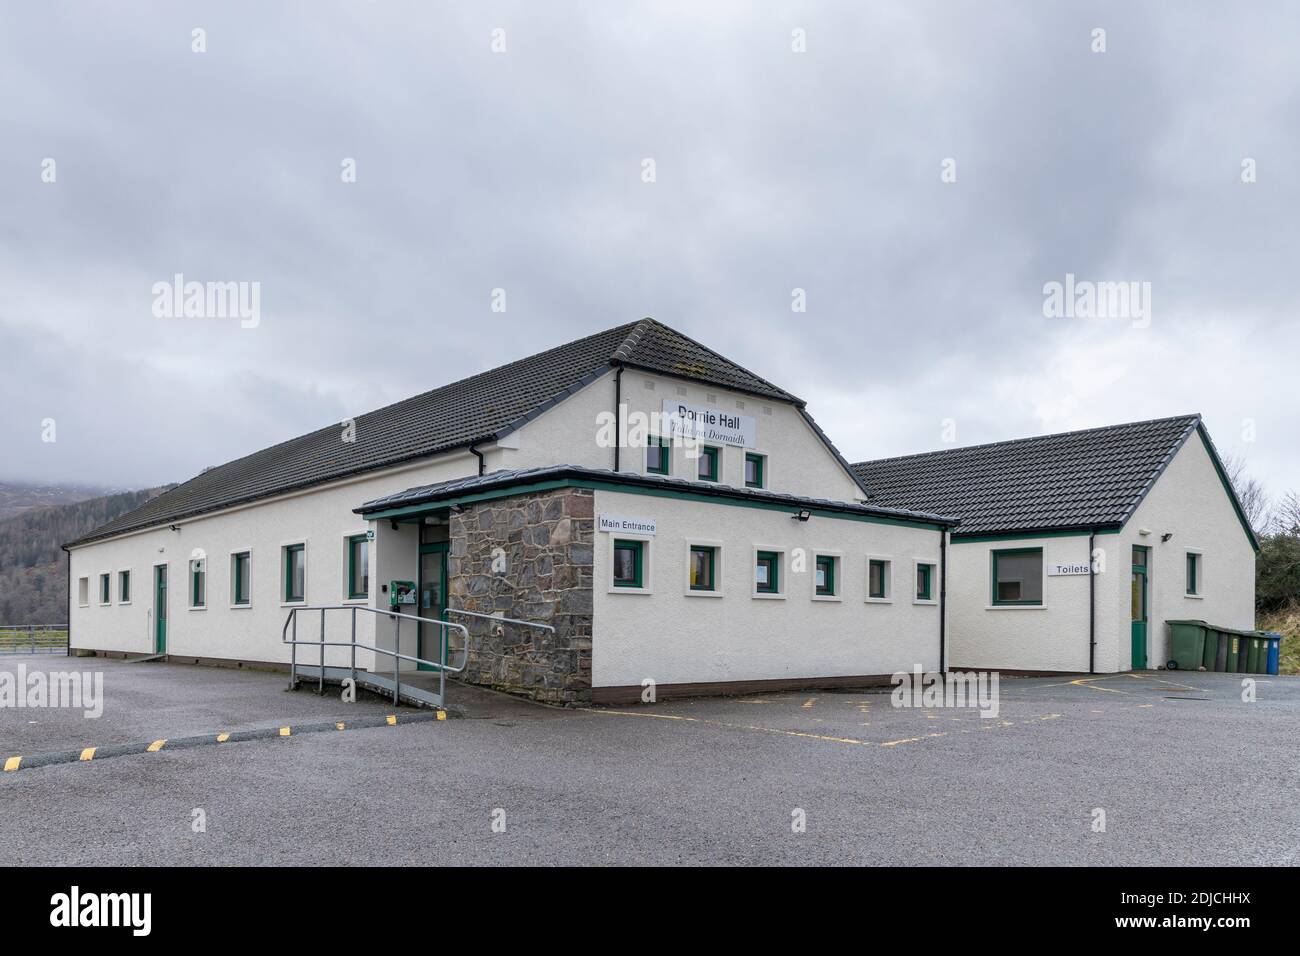 The Dornie and District Community Hall, Dornie, Kyle of Lochalsh, Scotland Stock Photo